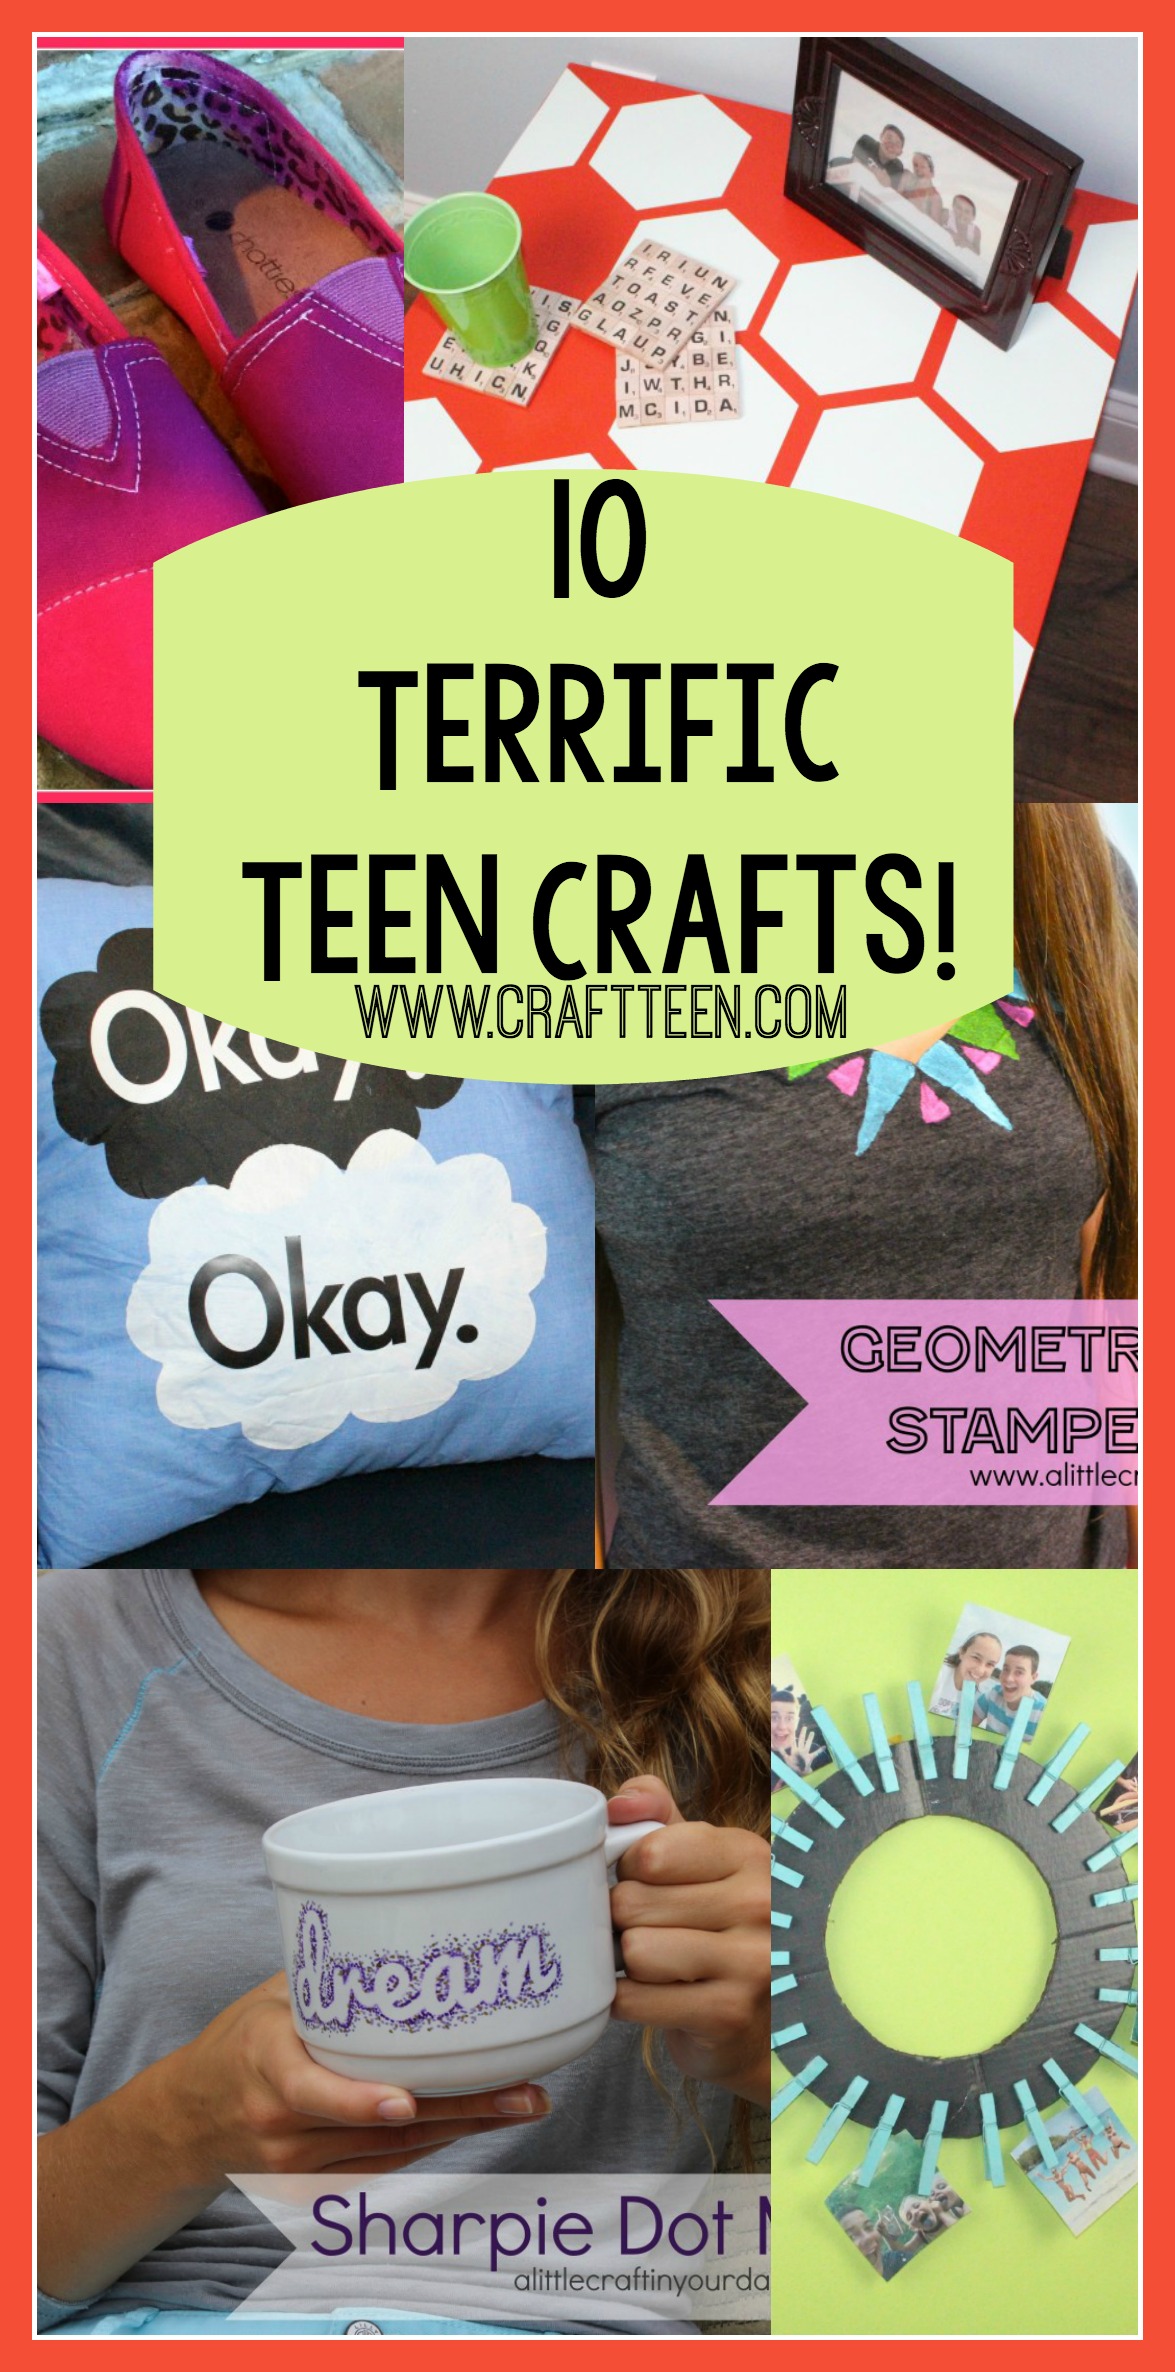 10 Terrific Teen Crafts!